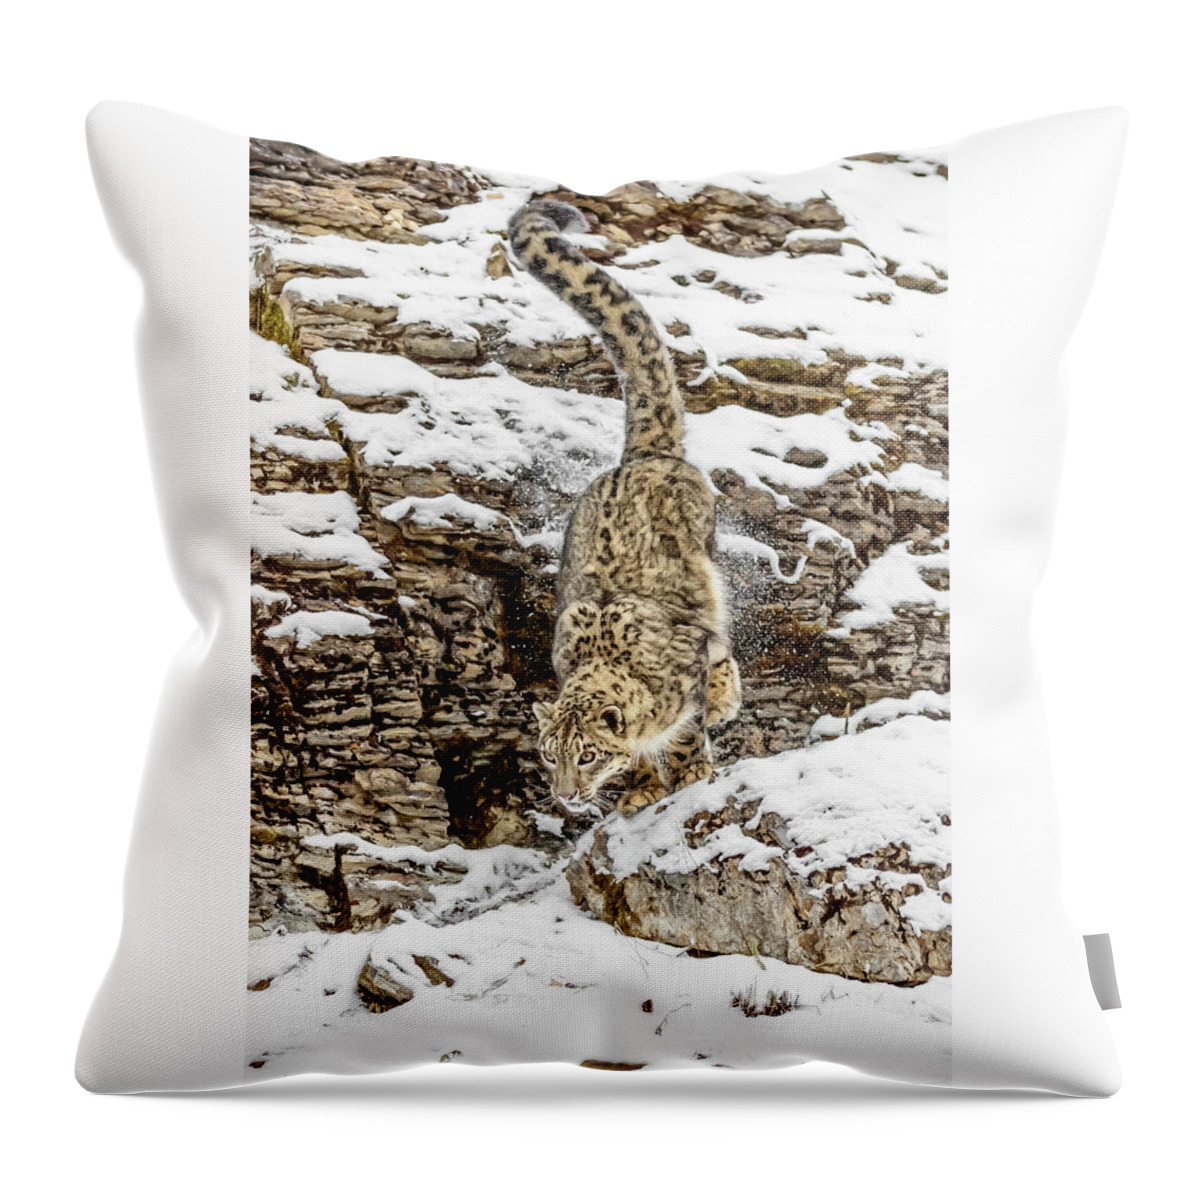 Himalayan Hunter Throw Pillow featuring the photograph Himalayan Hunter by Wes and Dotty Weber